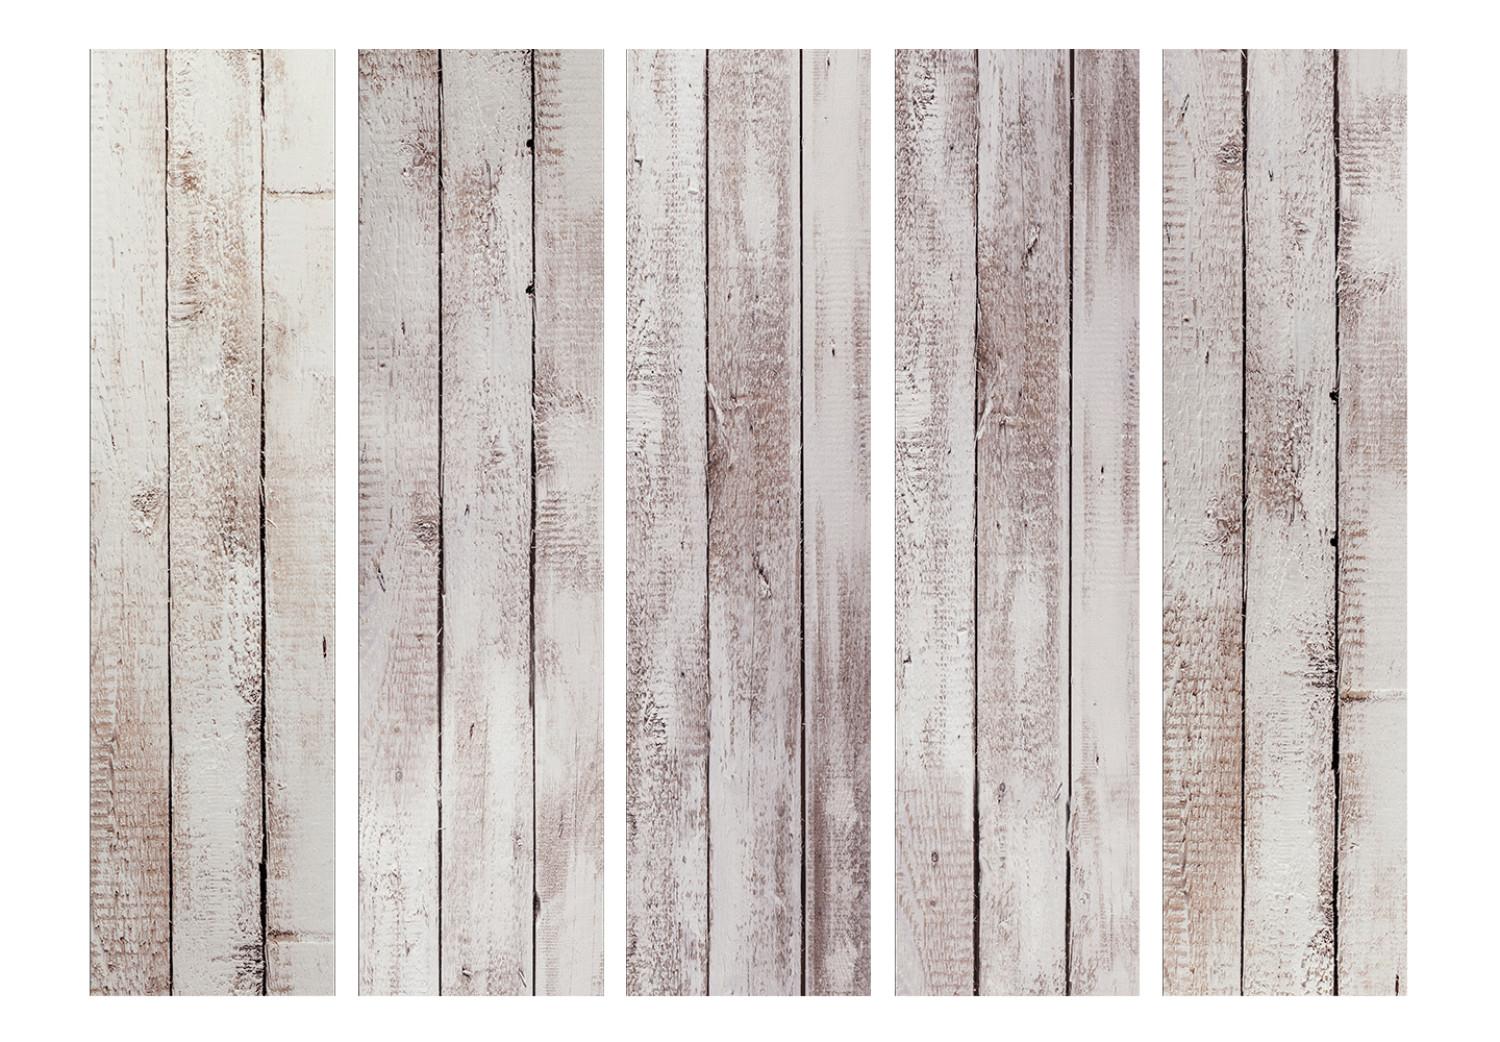 Biombo original Madera refinada II - textura desgastada de tablones de madera blancos